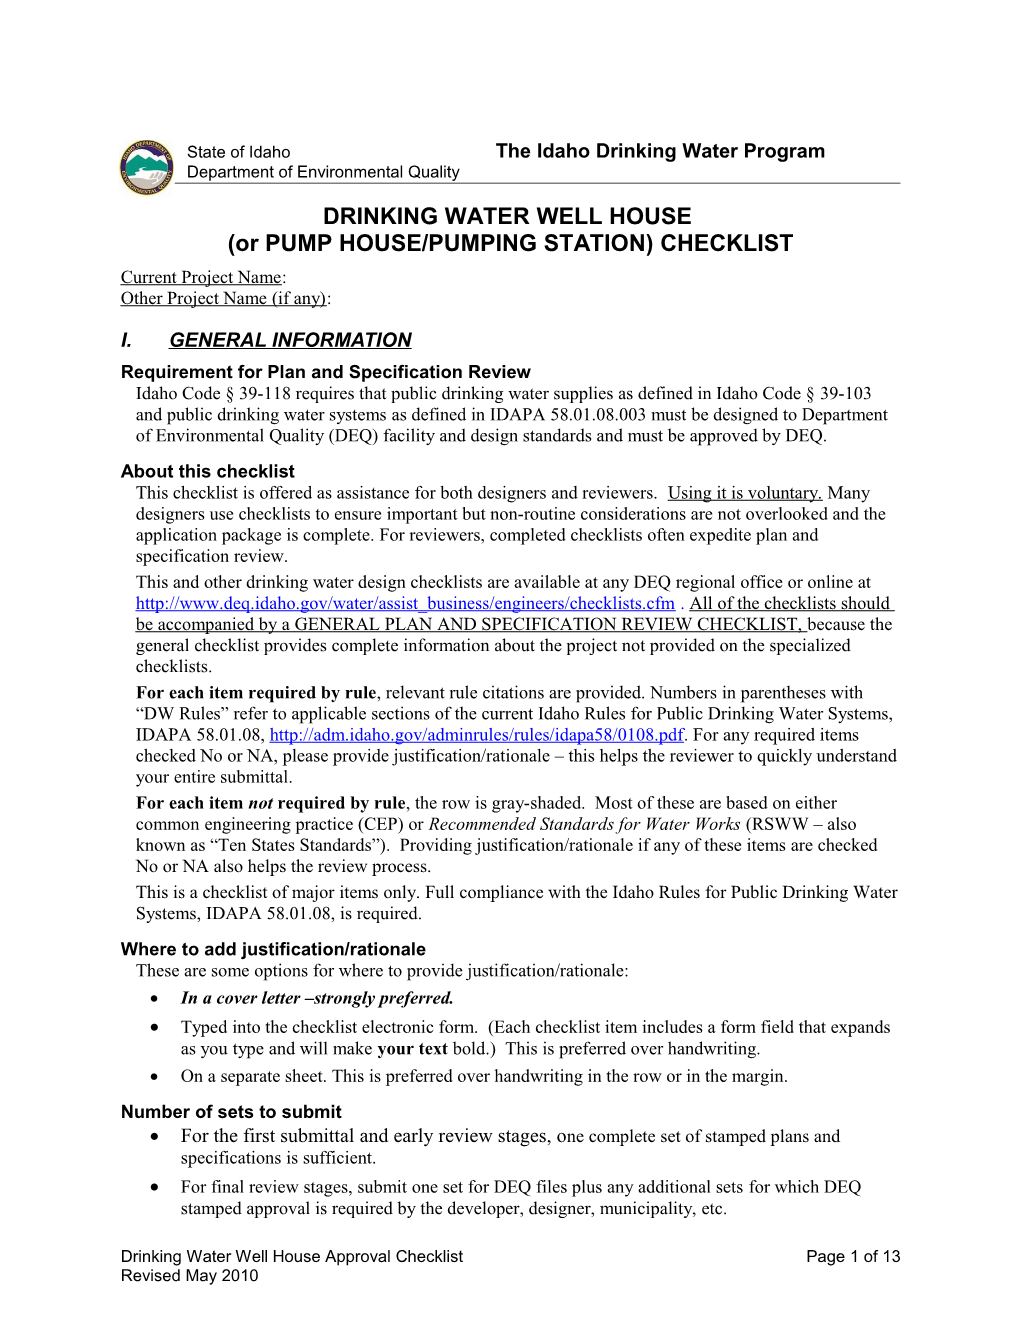 Drinking Water Distribution System Checklist